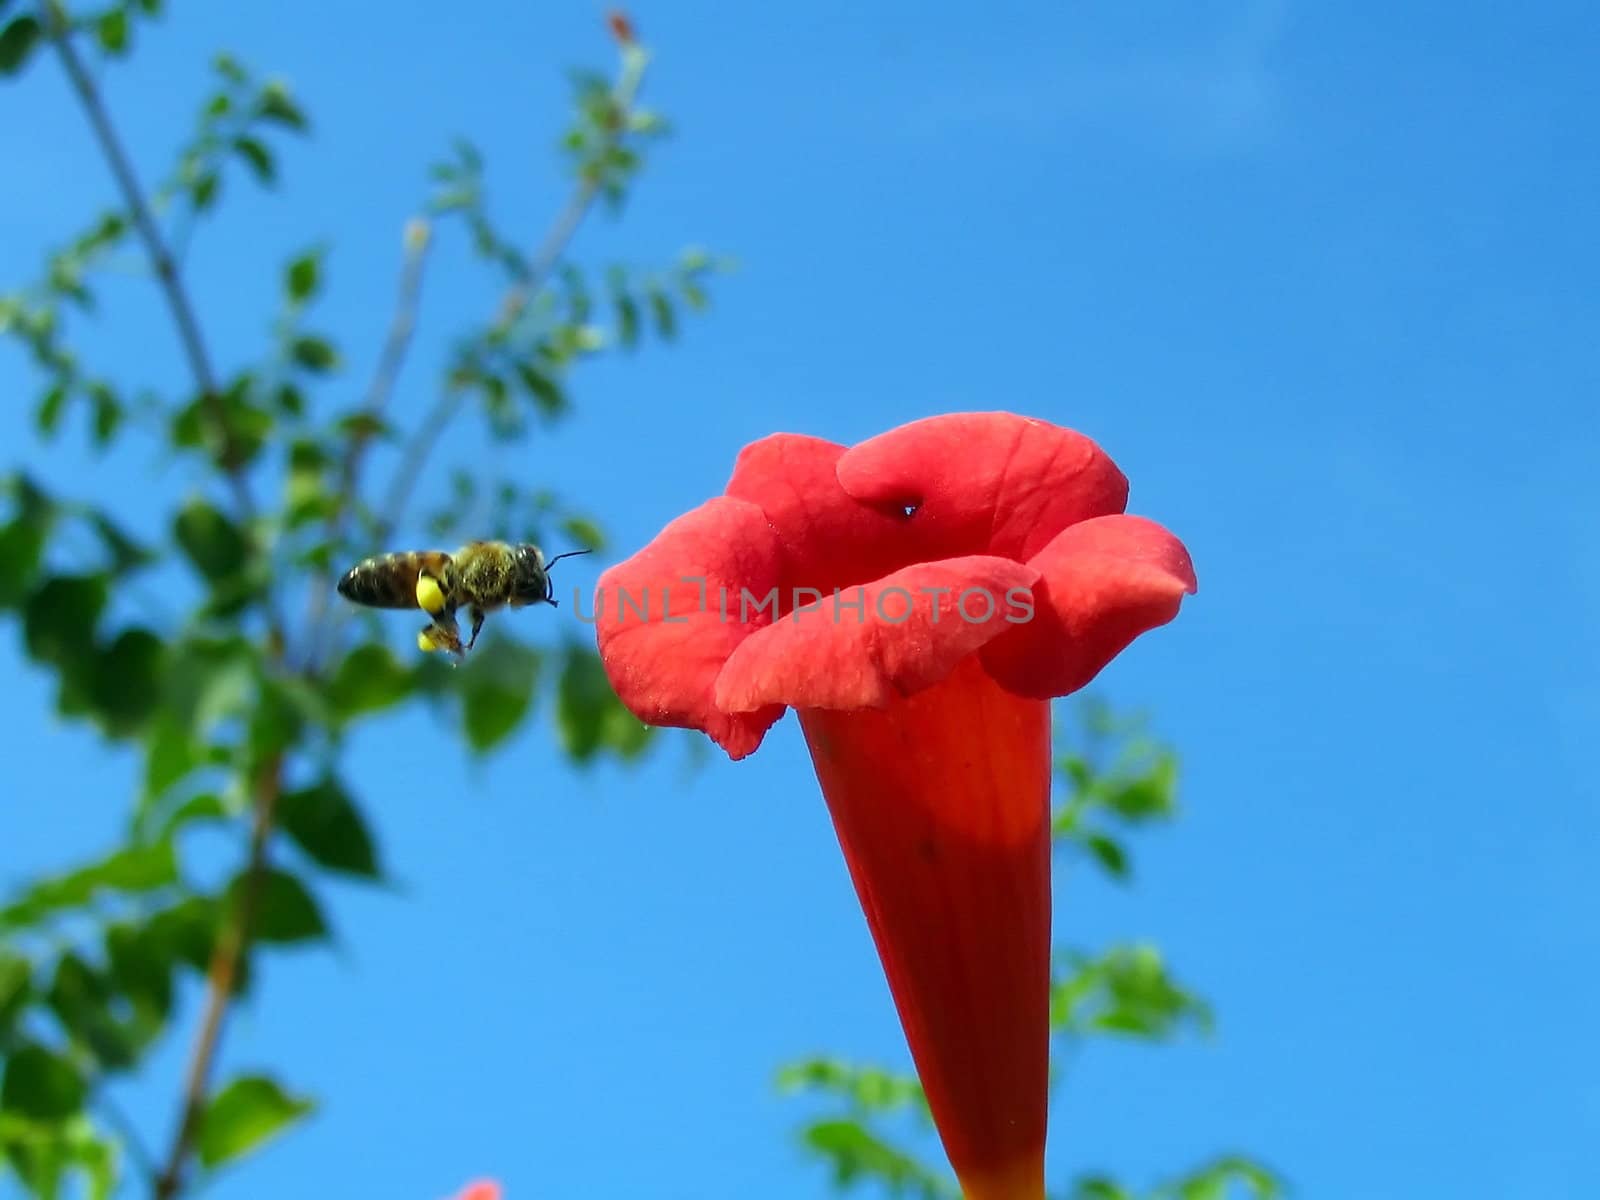 Flight of the bee by ichip